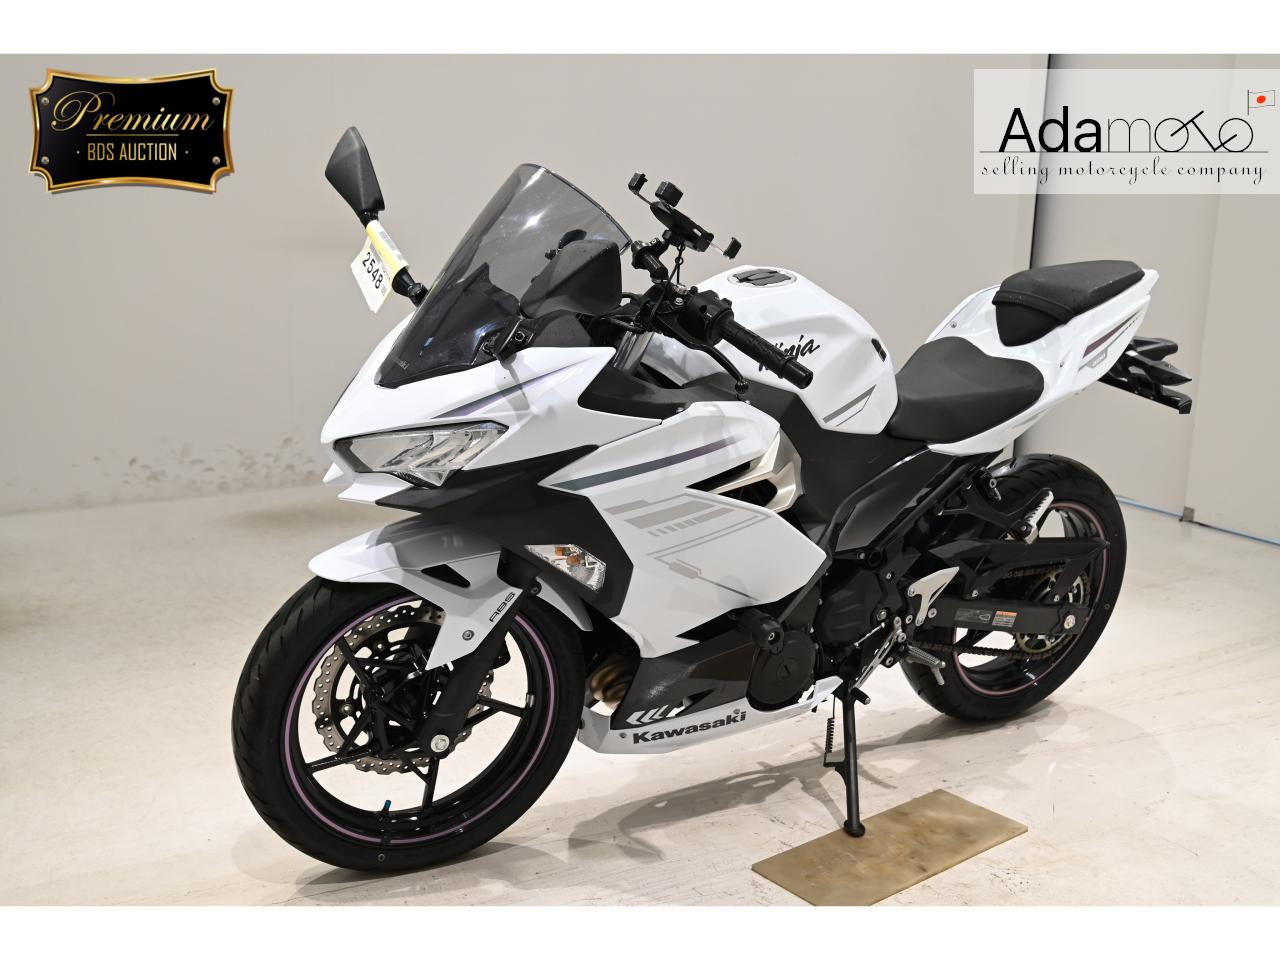 Kawasaki NINJA400 2 - Adamoto - Motorcycles from Japan